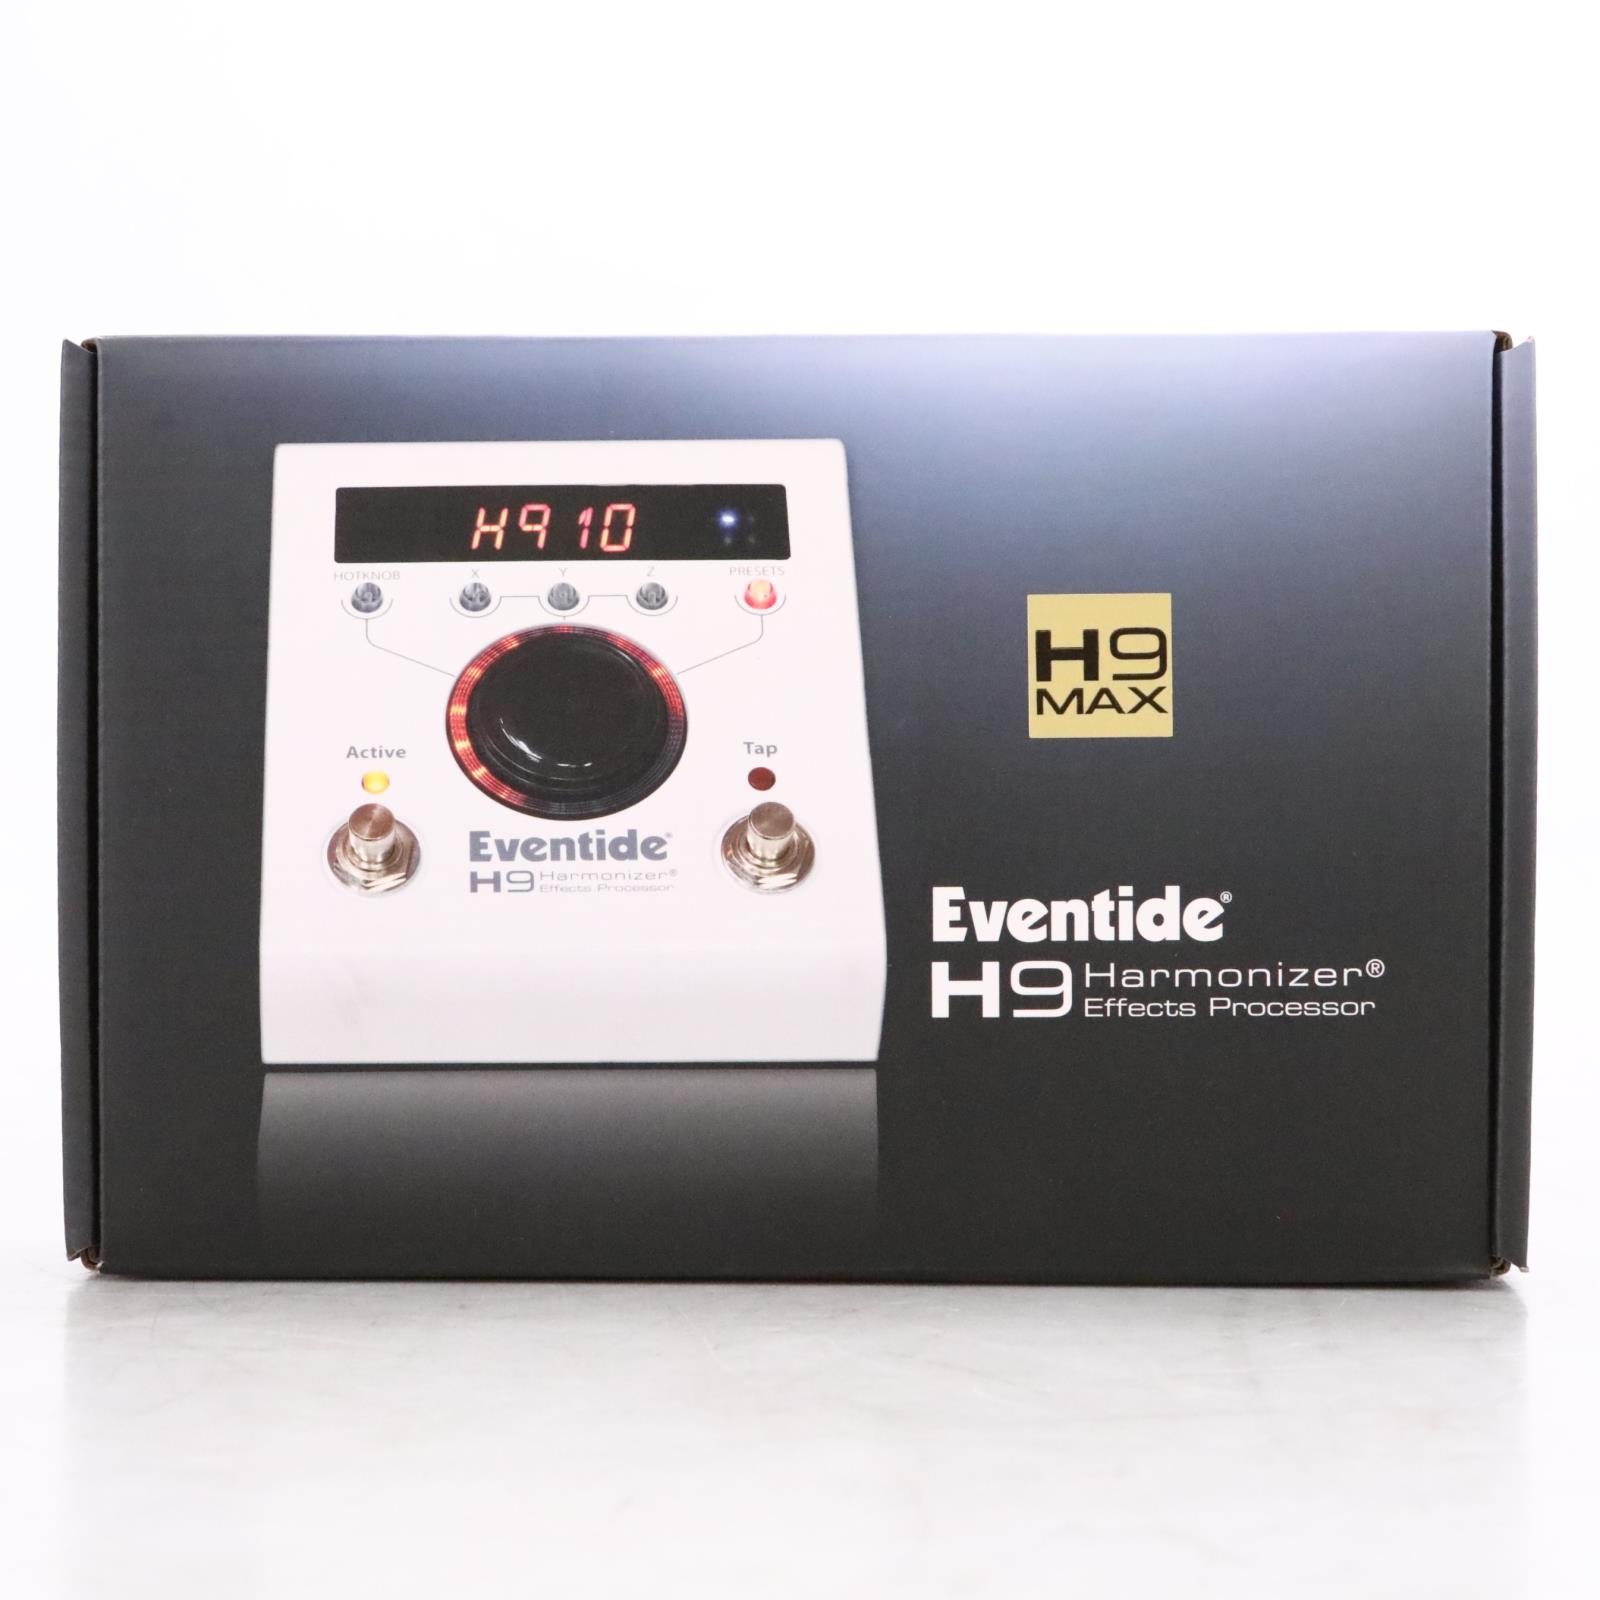 Eventide H9 Max Harmonizer Multi-Effects Guitar Pedal in Sealed Box #50603